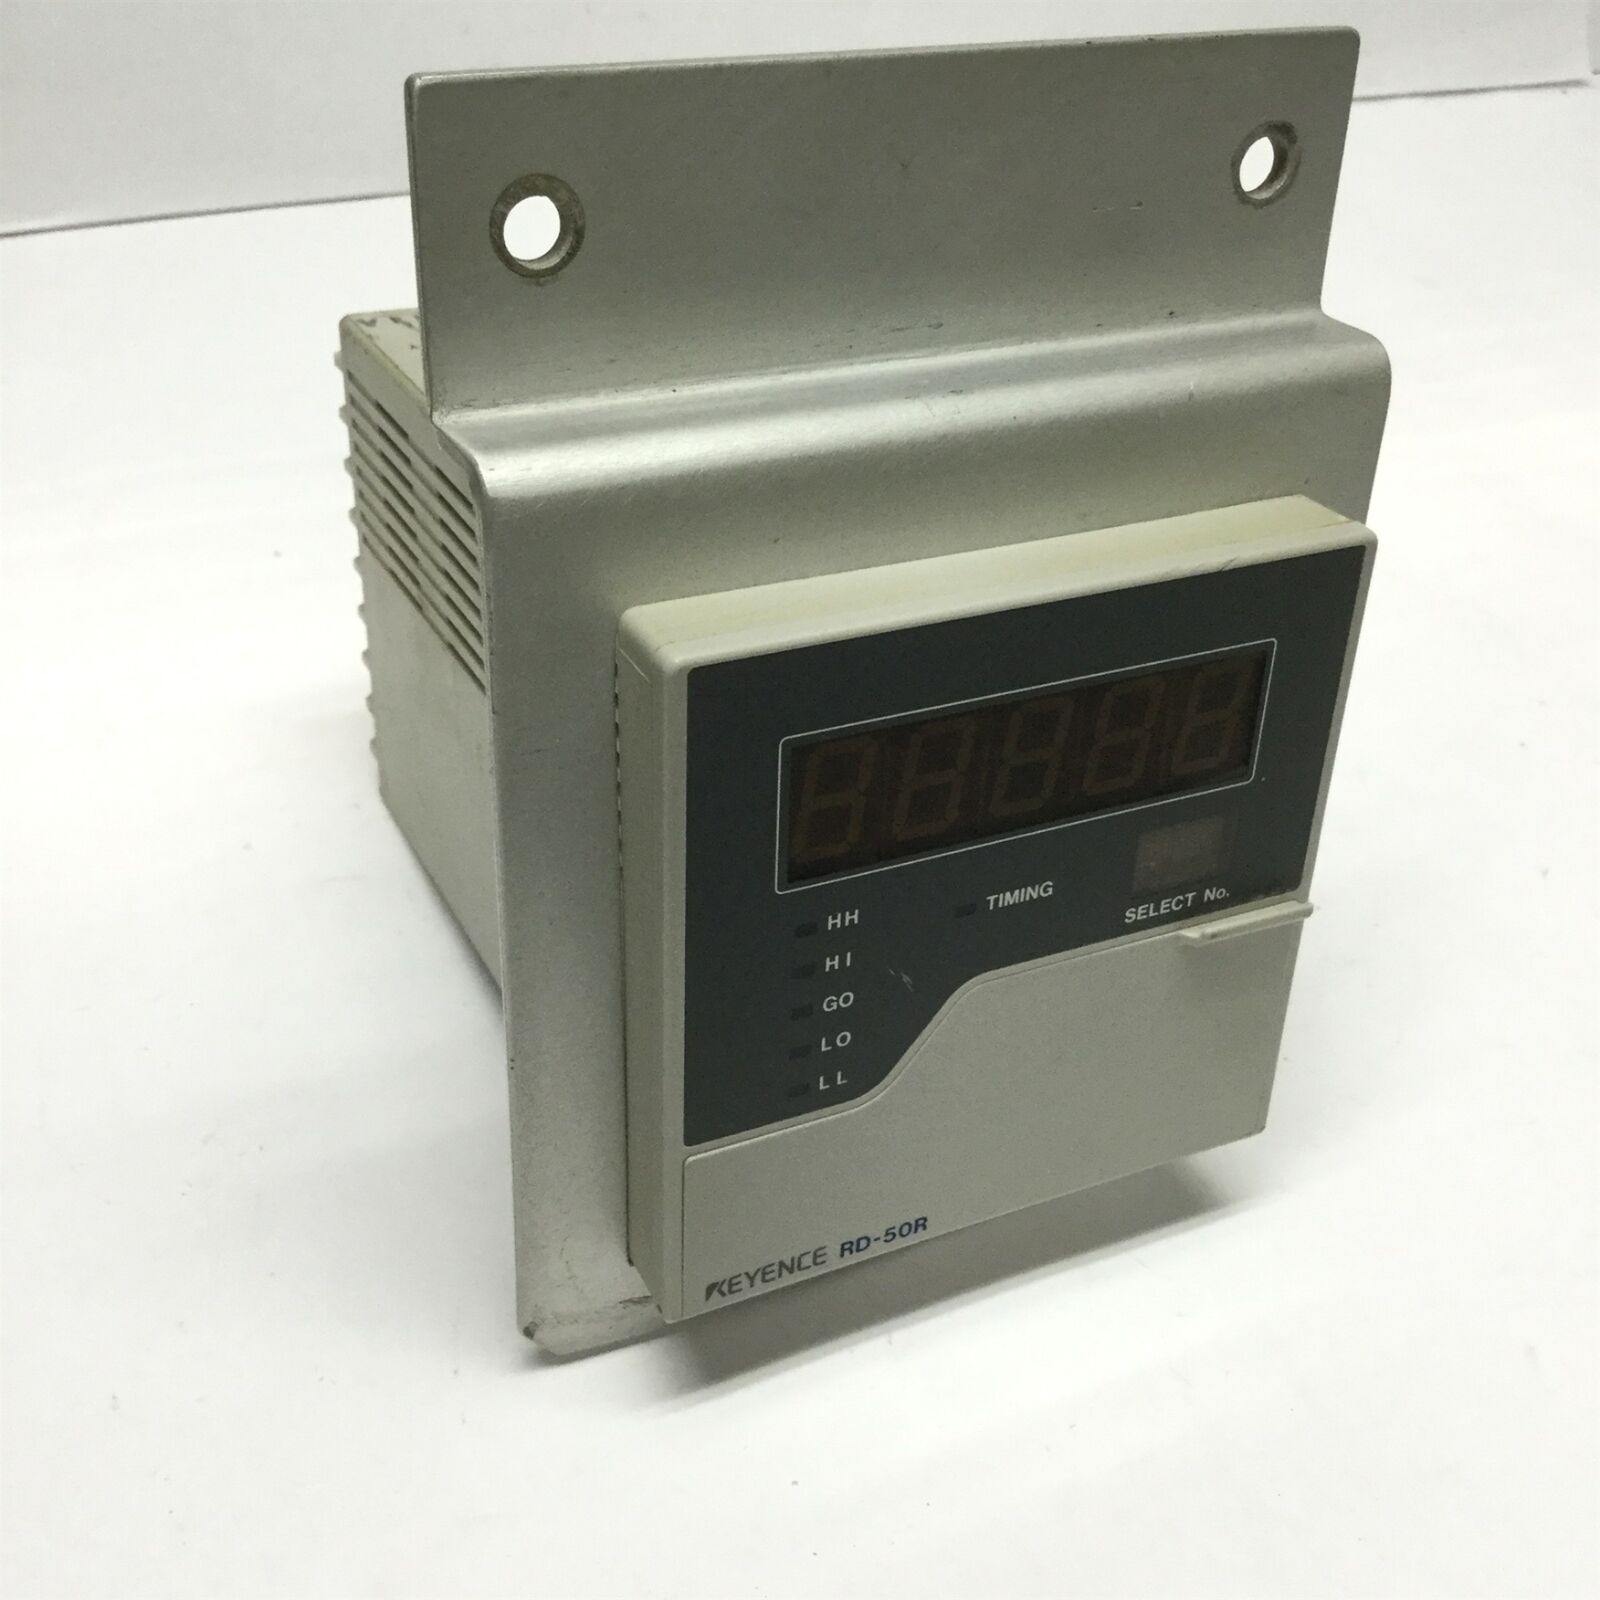 Keyence RD-50R Analog Sensor Controller, Main Unit, DC Voltage/Current, RS-232